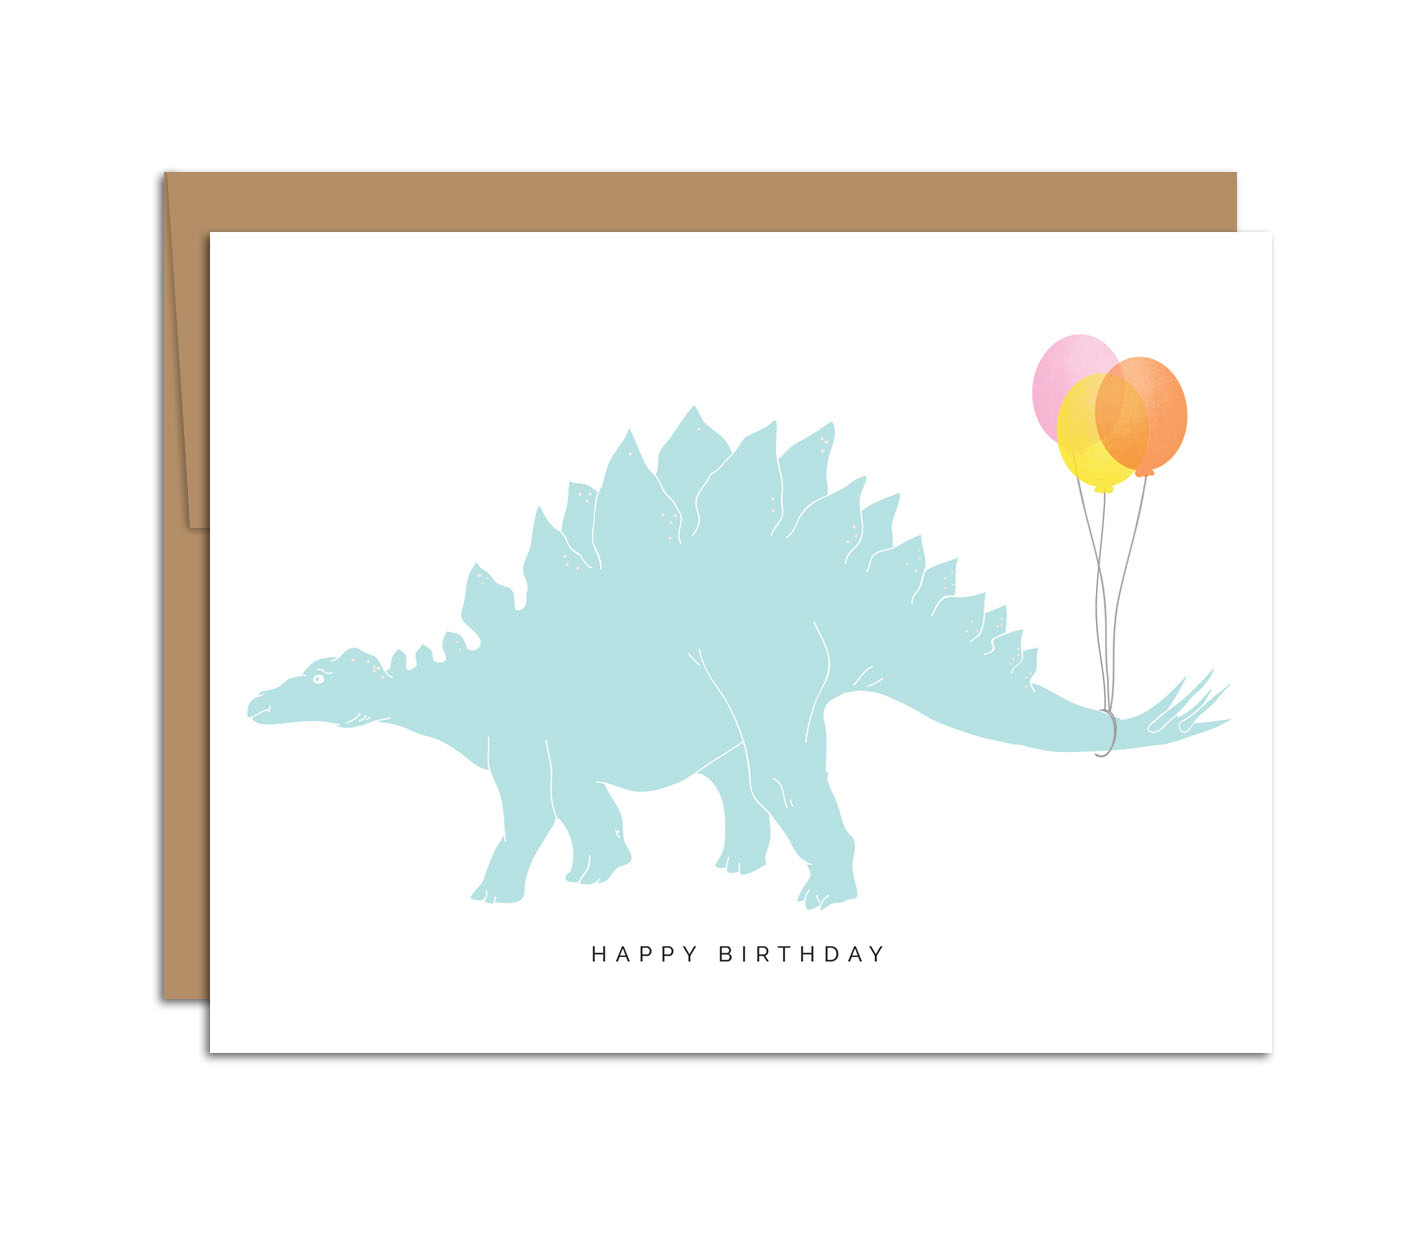 Stegosaurus Card